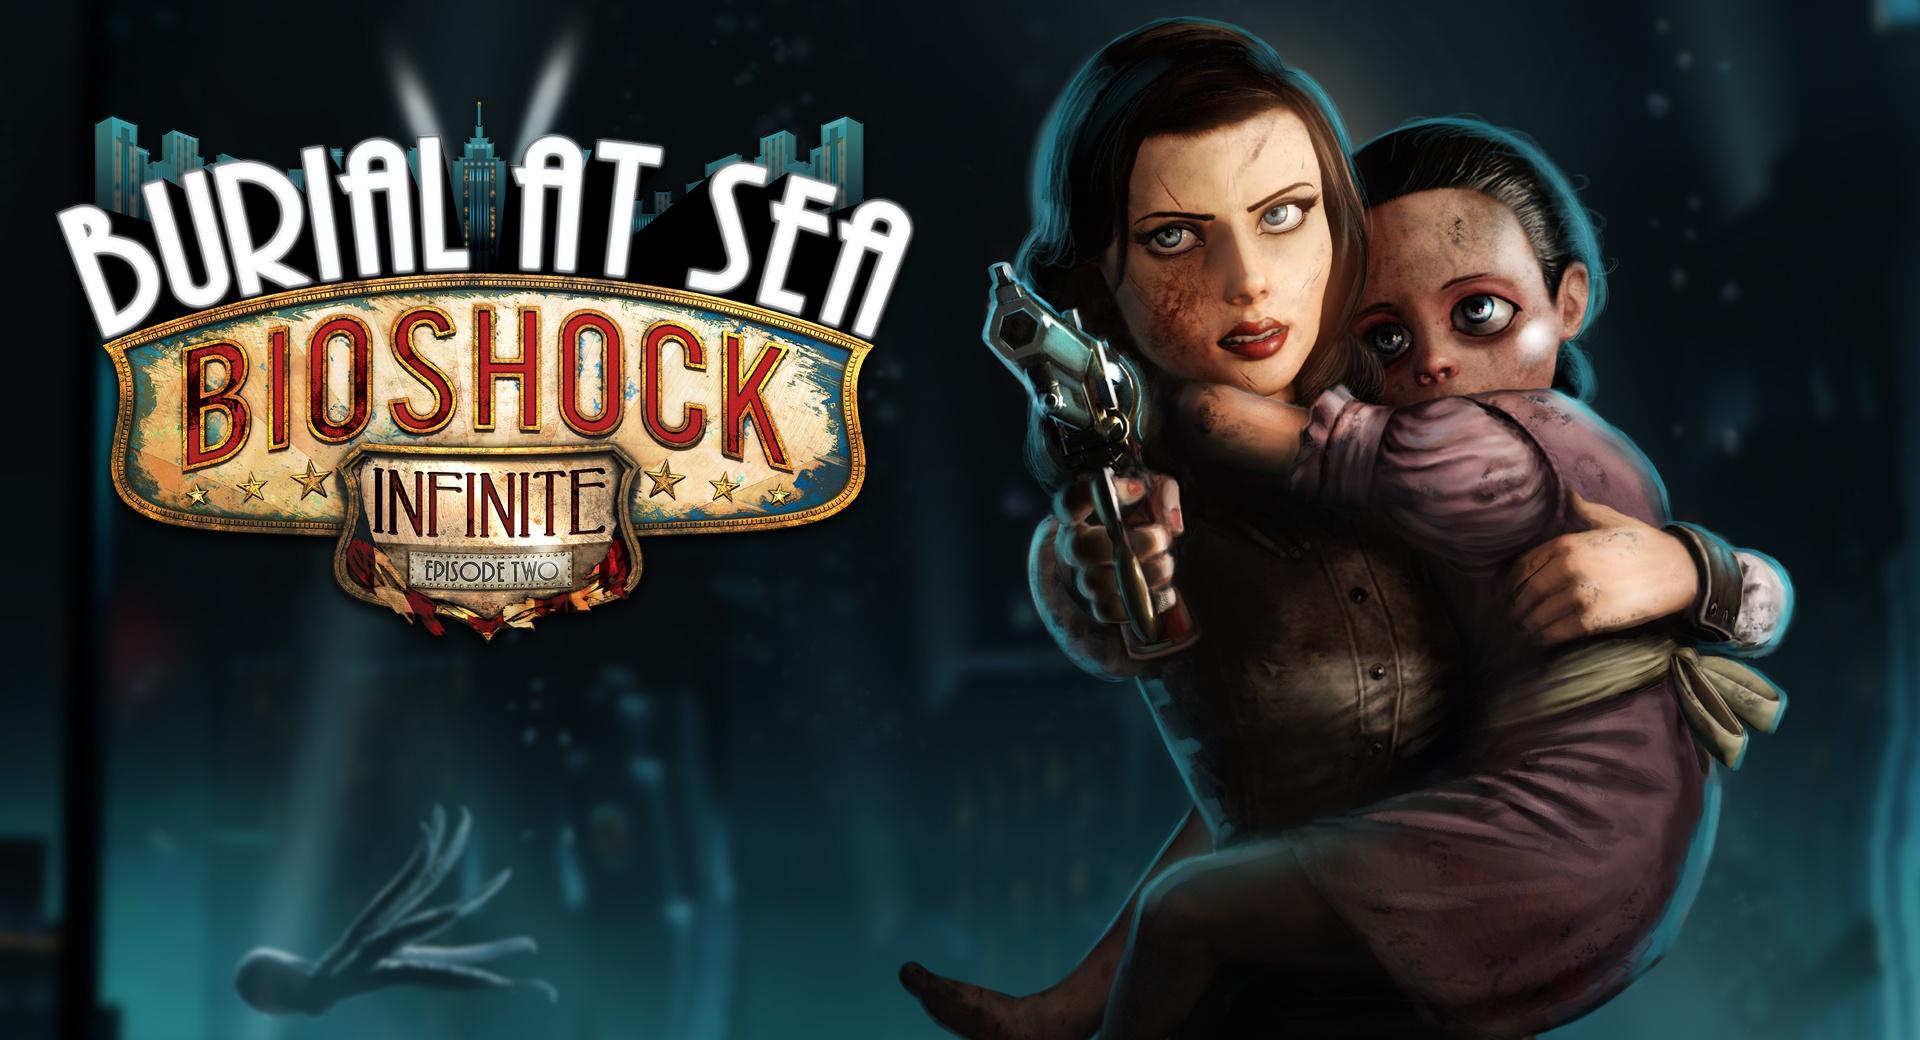 BioShock Infinite Burial at Sea - Episode 2 wallpapers HD quality